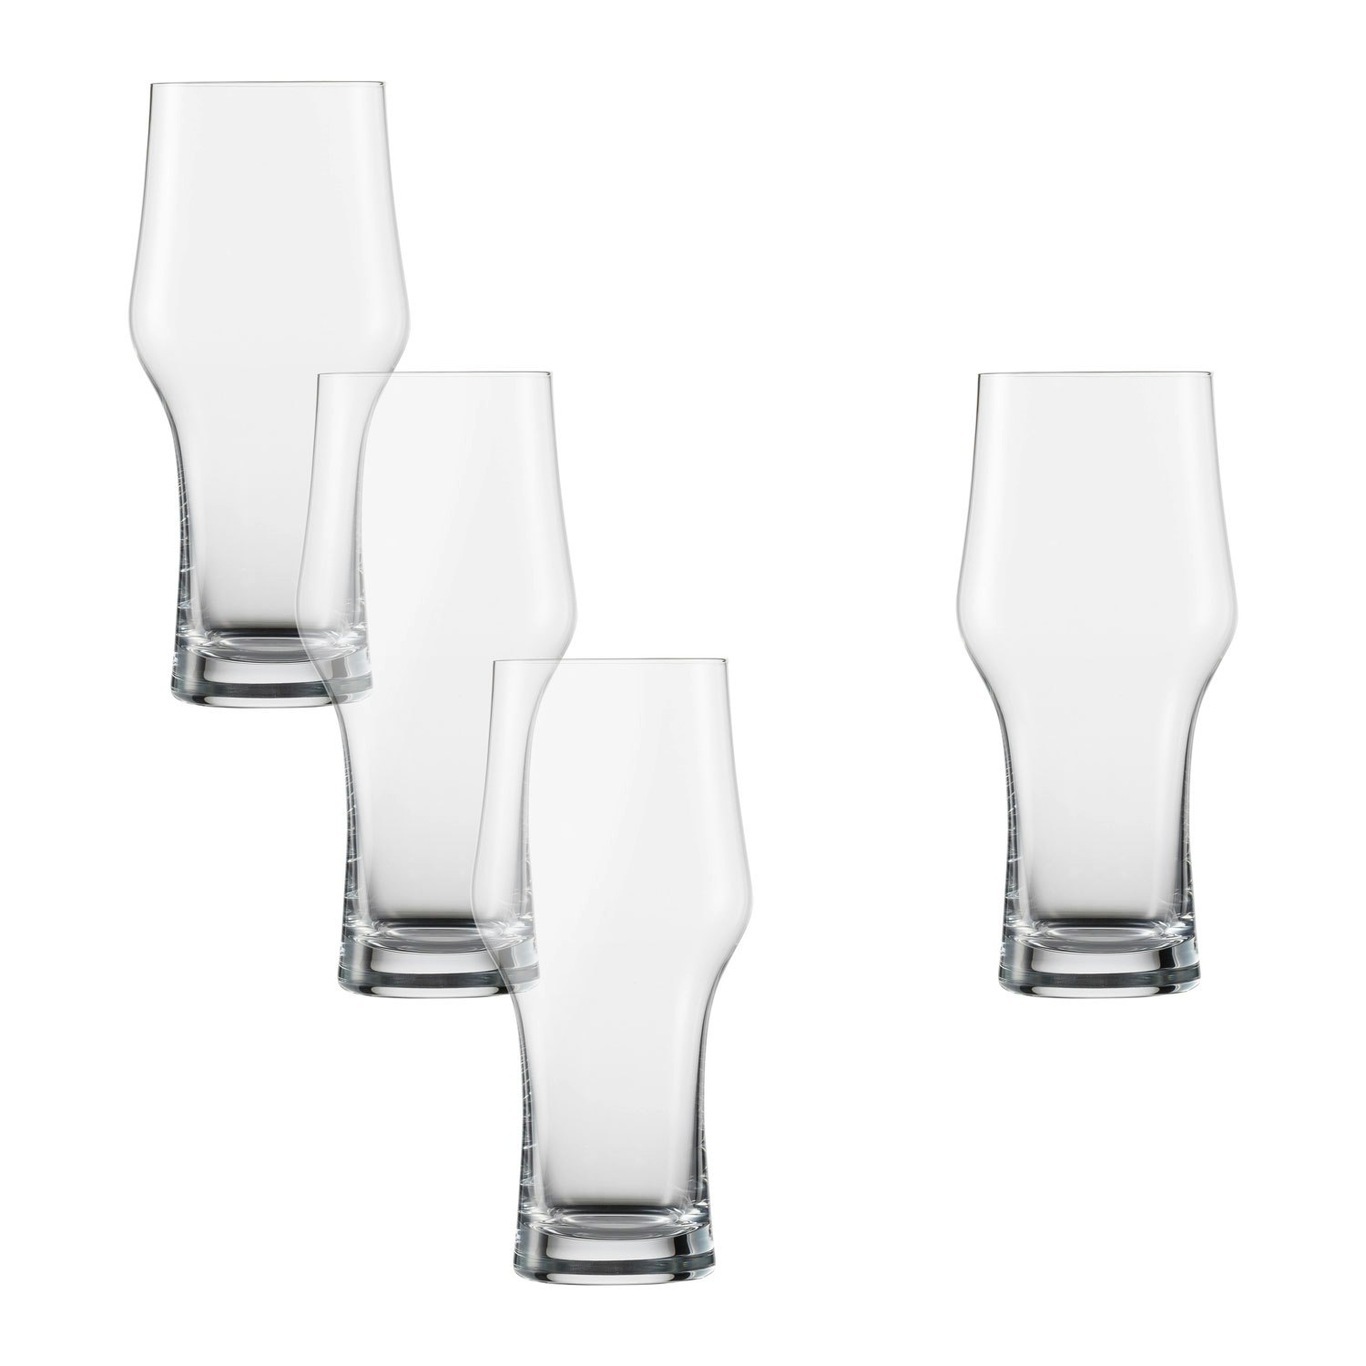 Craft Beer IPA Glass Set of 4, 54 cl - Spiegelau @ RoyalDesign